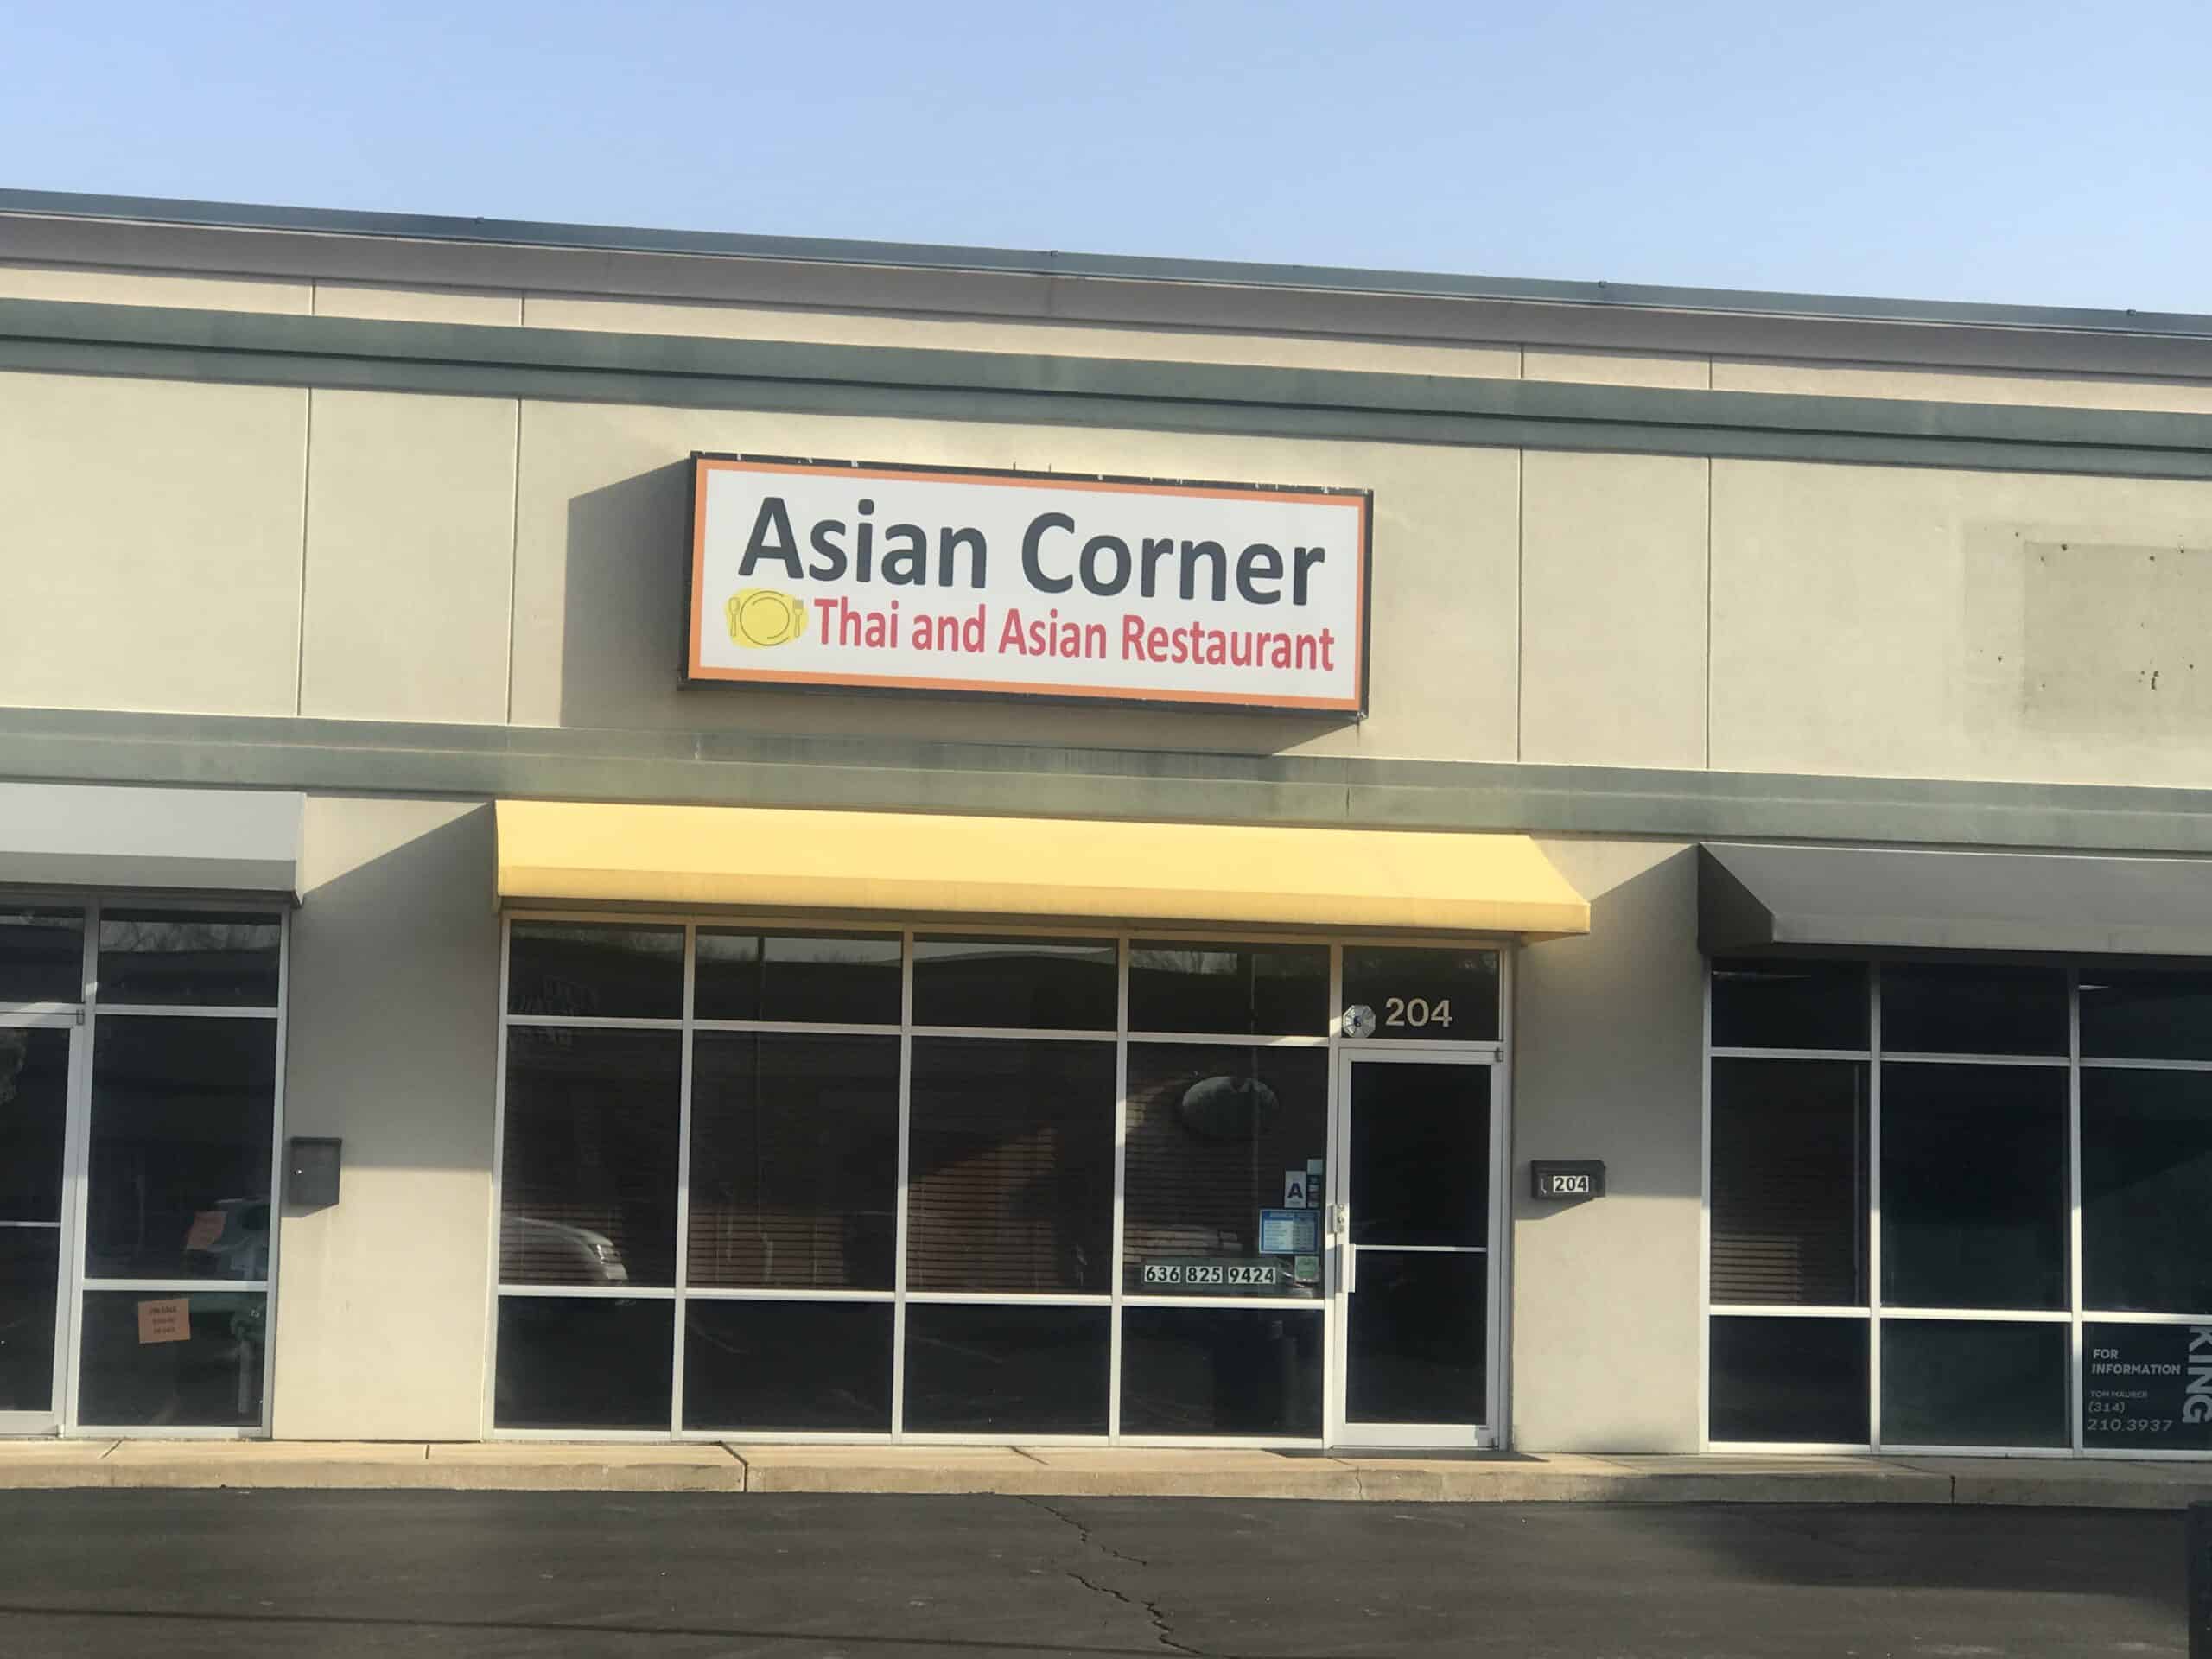 Restaurant Review – Asian Corner in Valley Park, Missouri